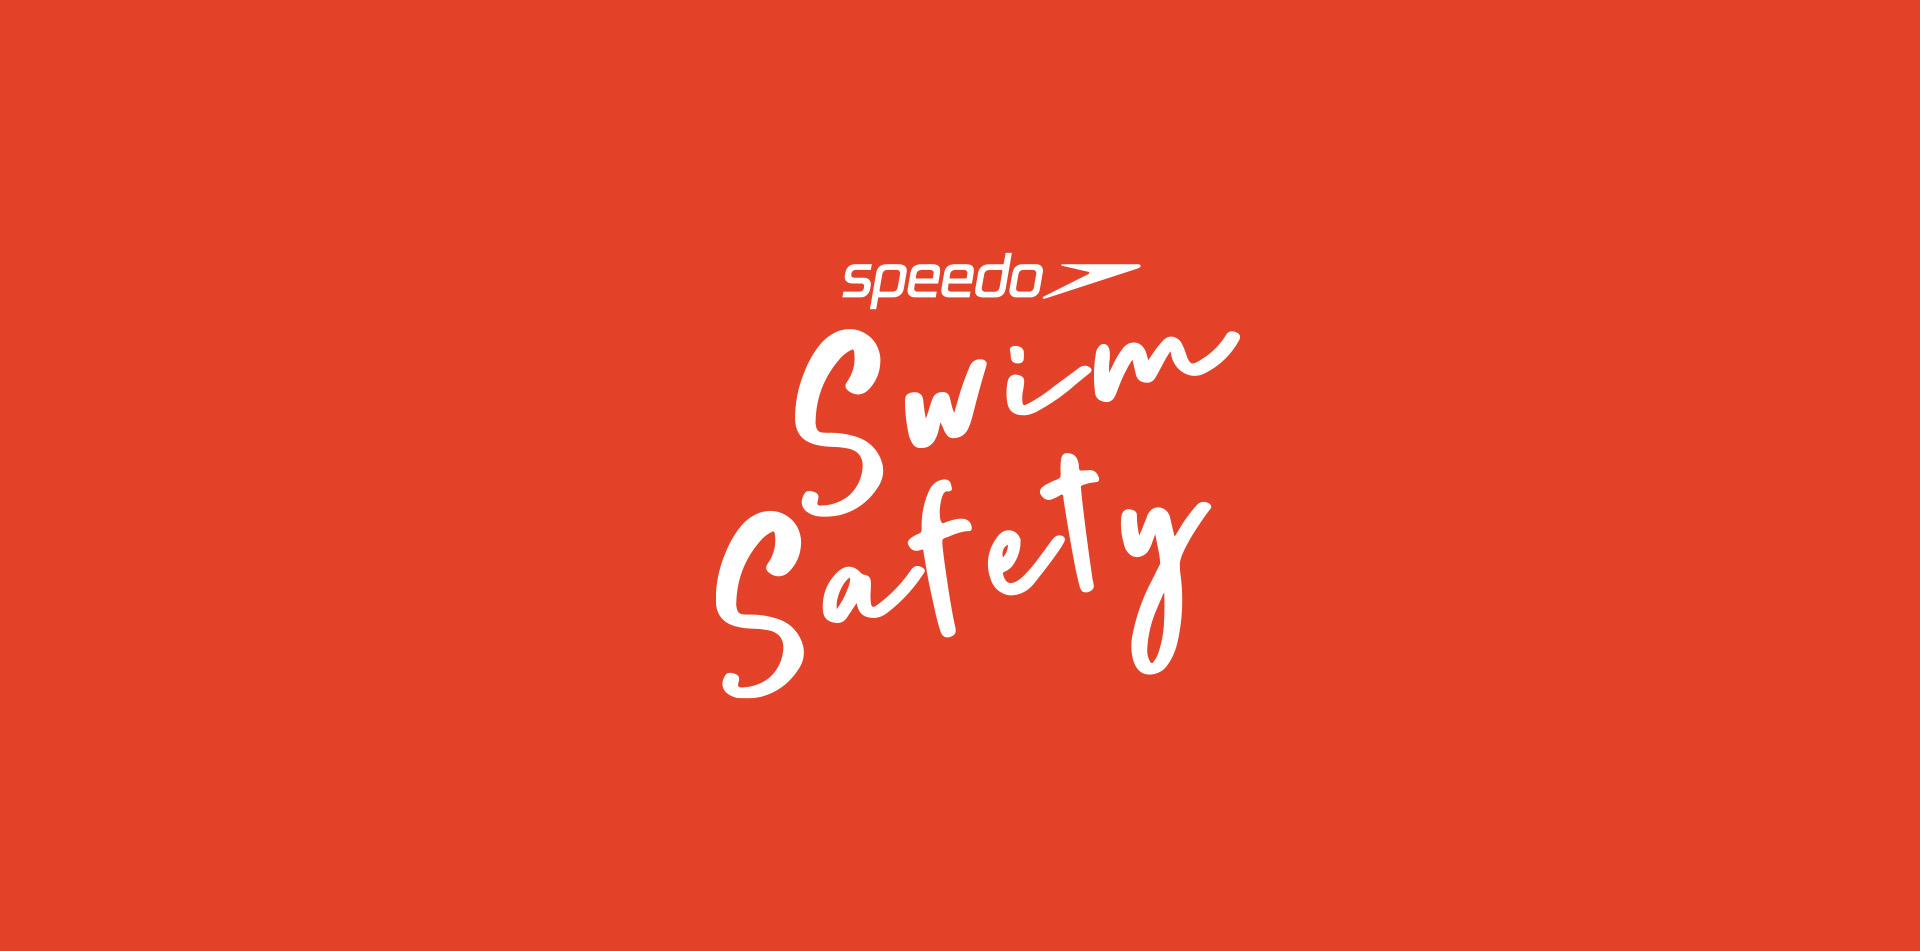 Speedo ארגון הצלה ימי 